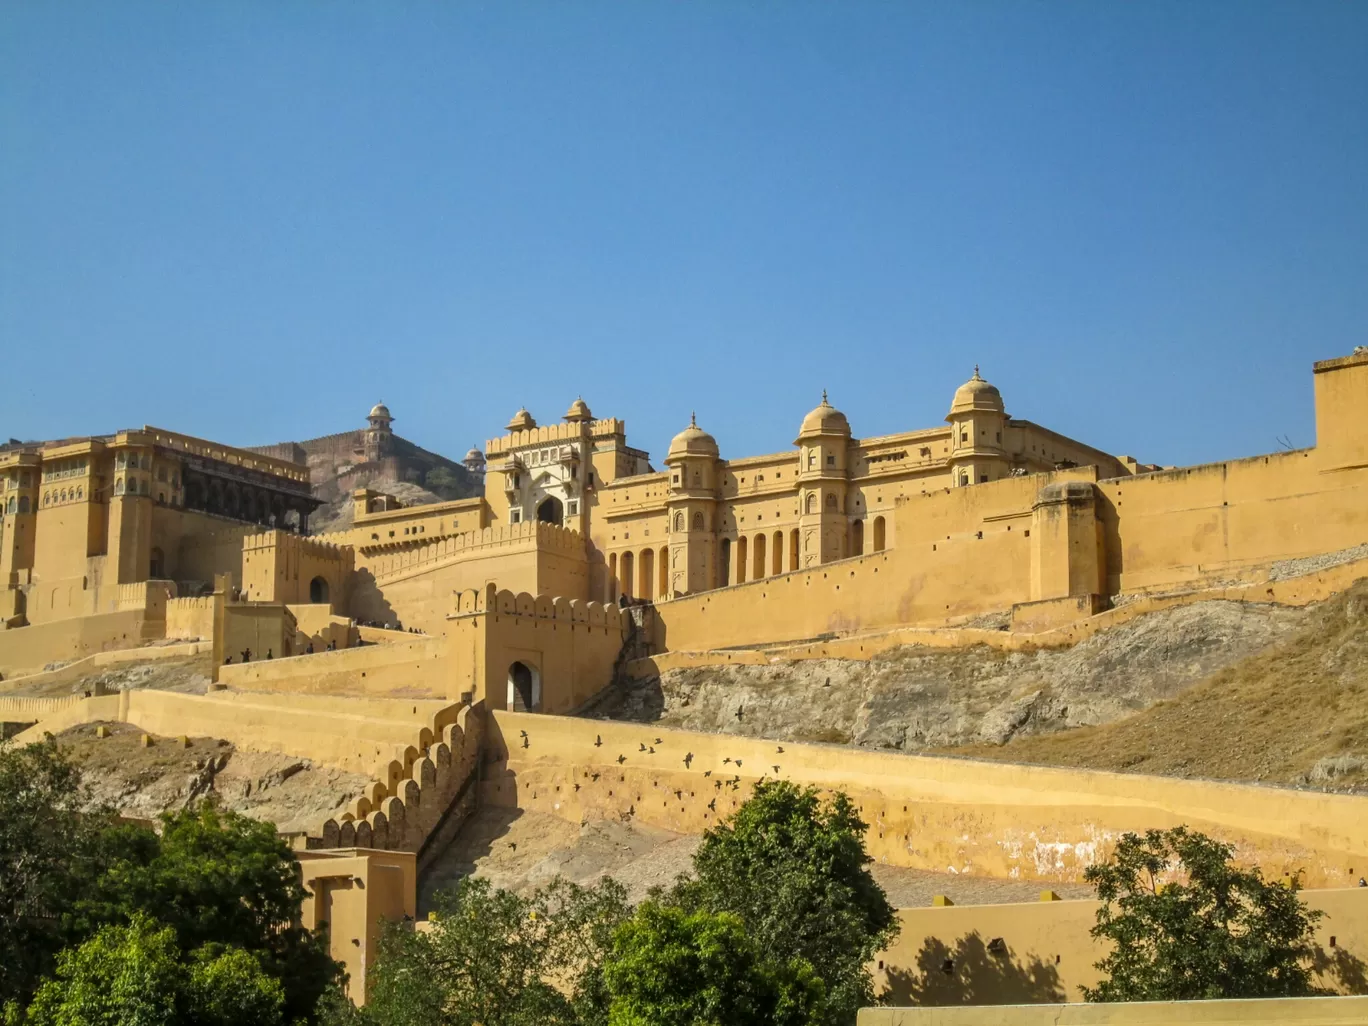 Photo of Amer Fort By Manish tripathi